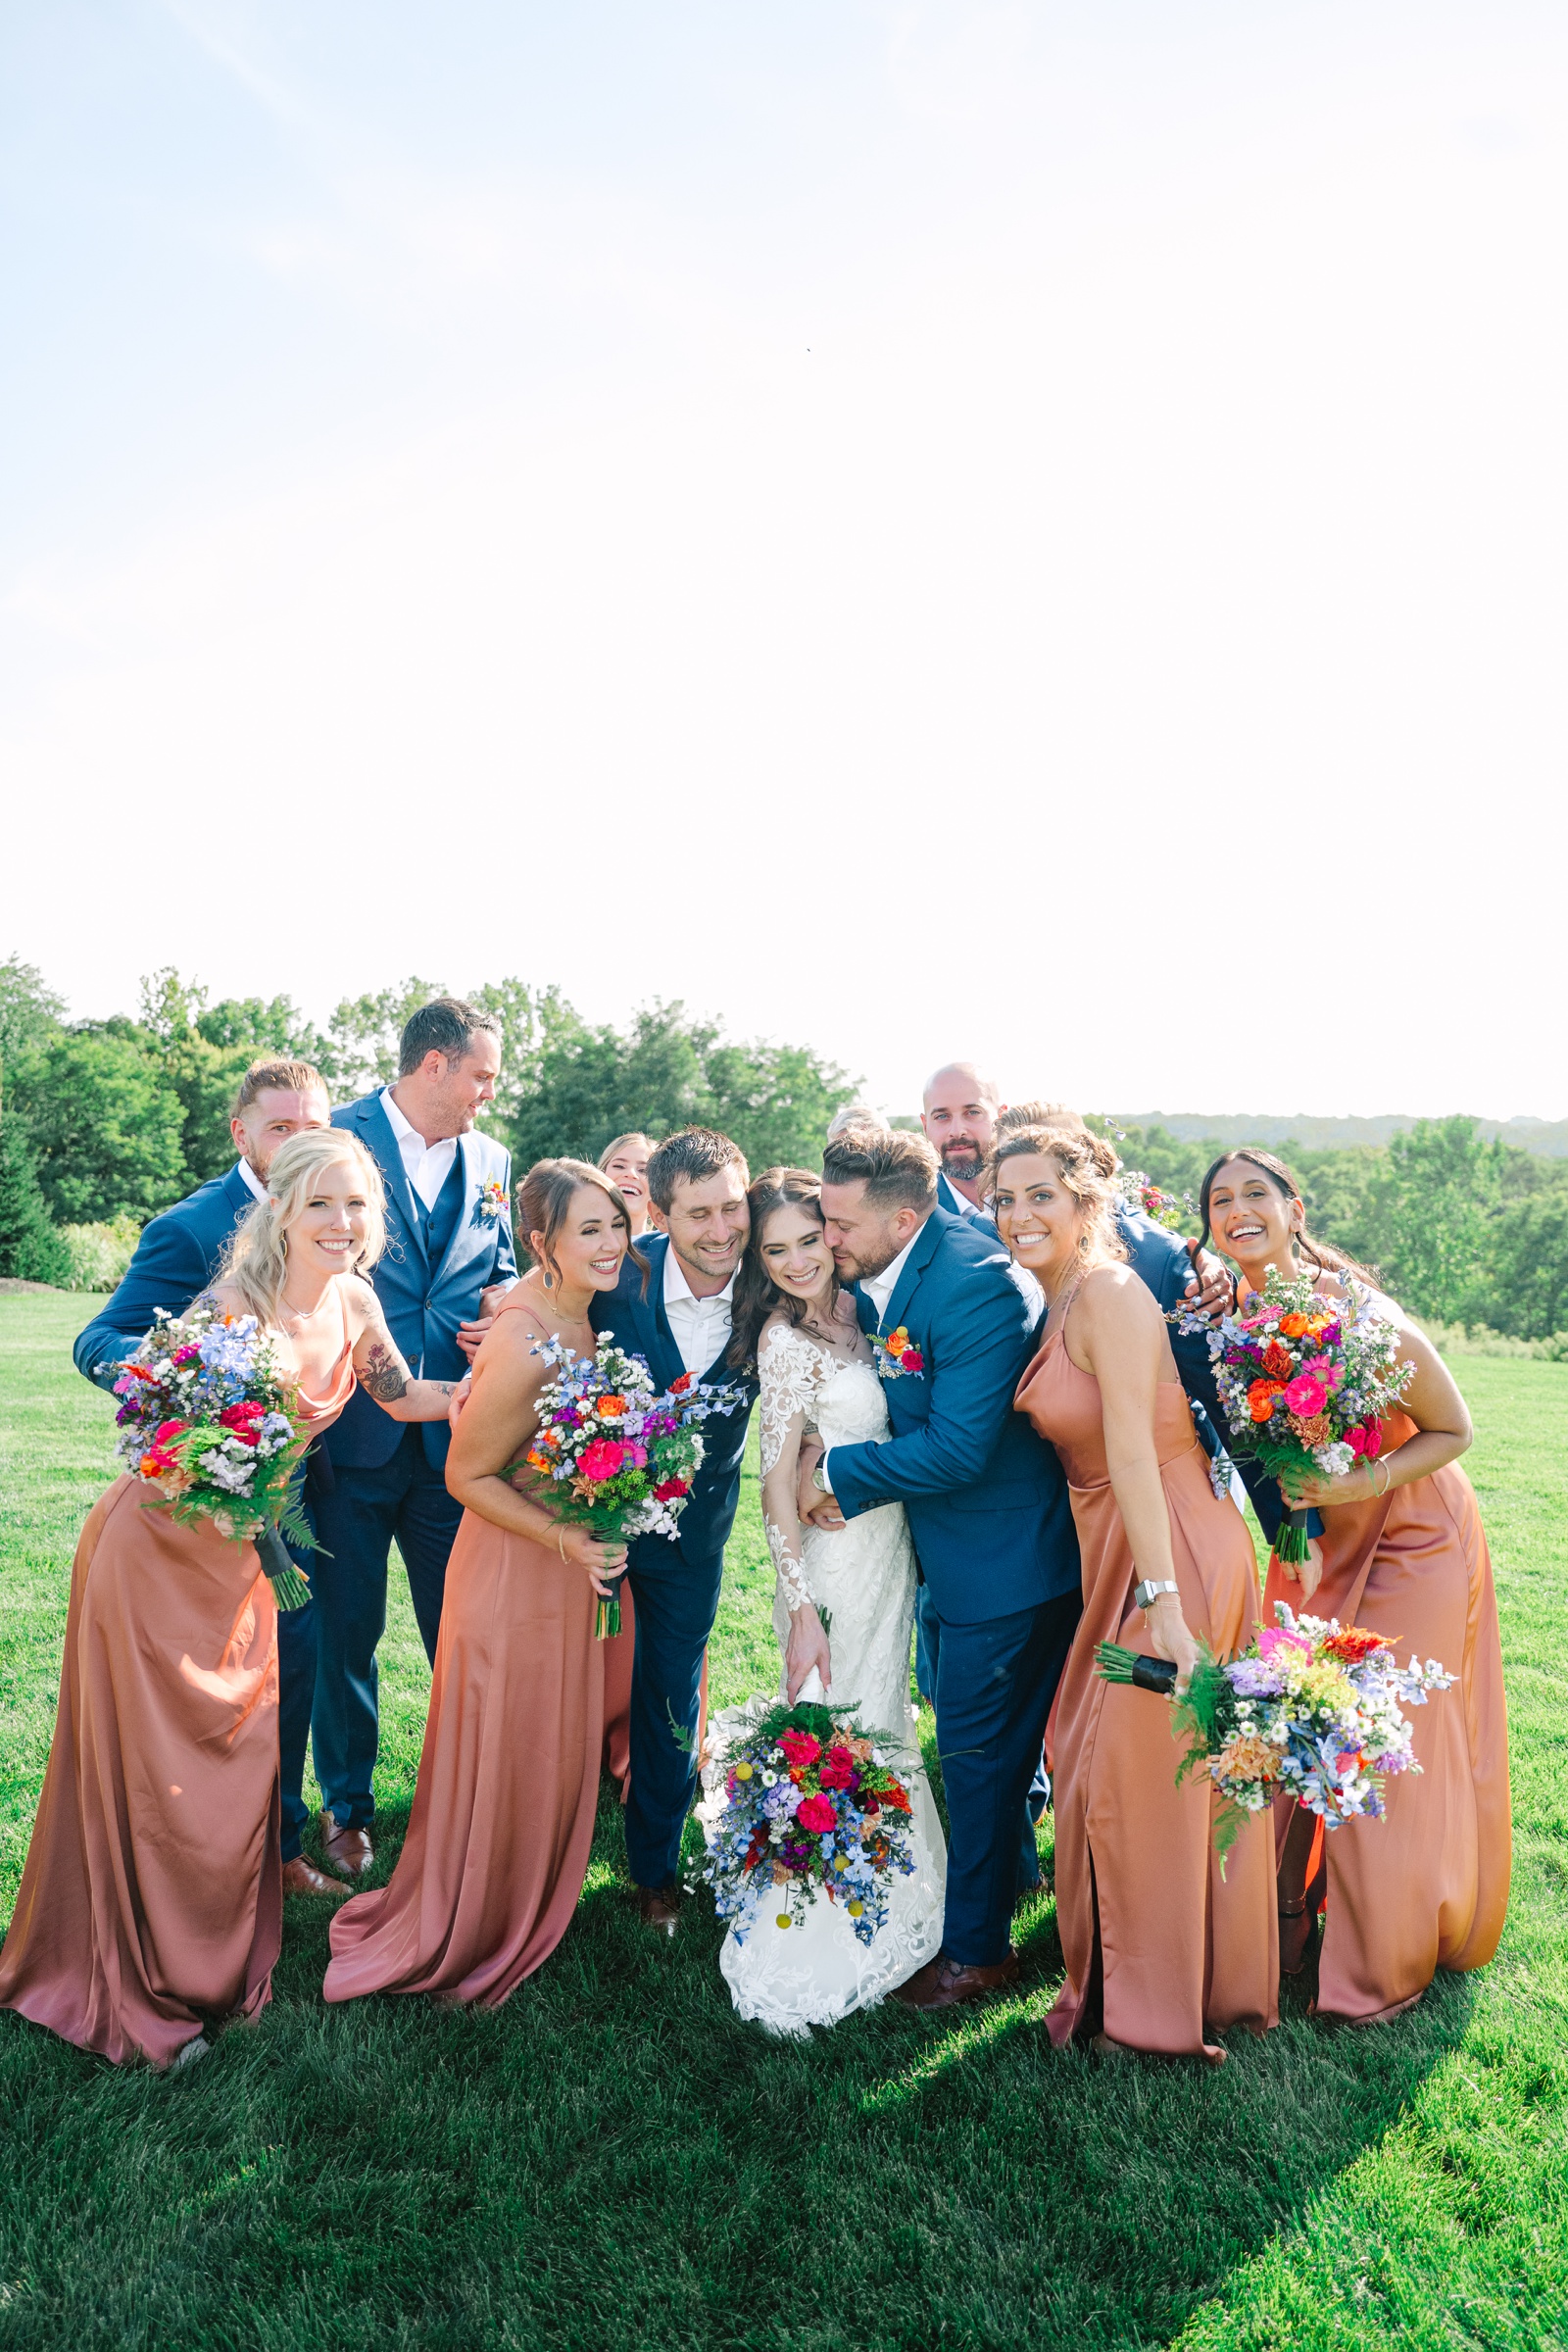 Summer wedding at Provence Mills in Girard Ohio